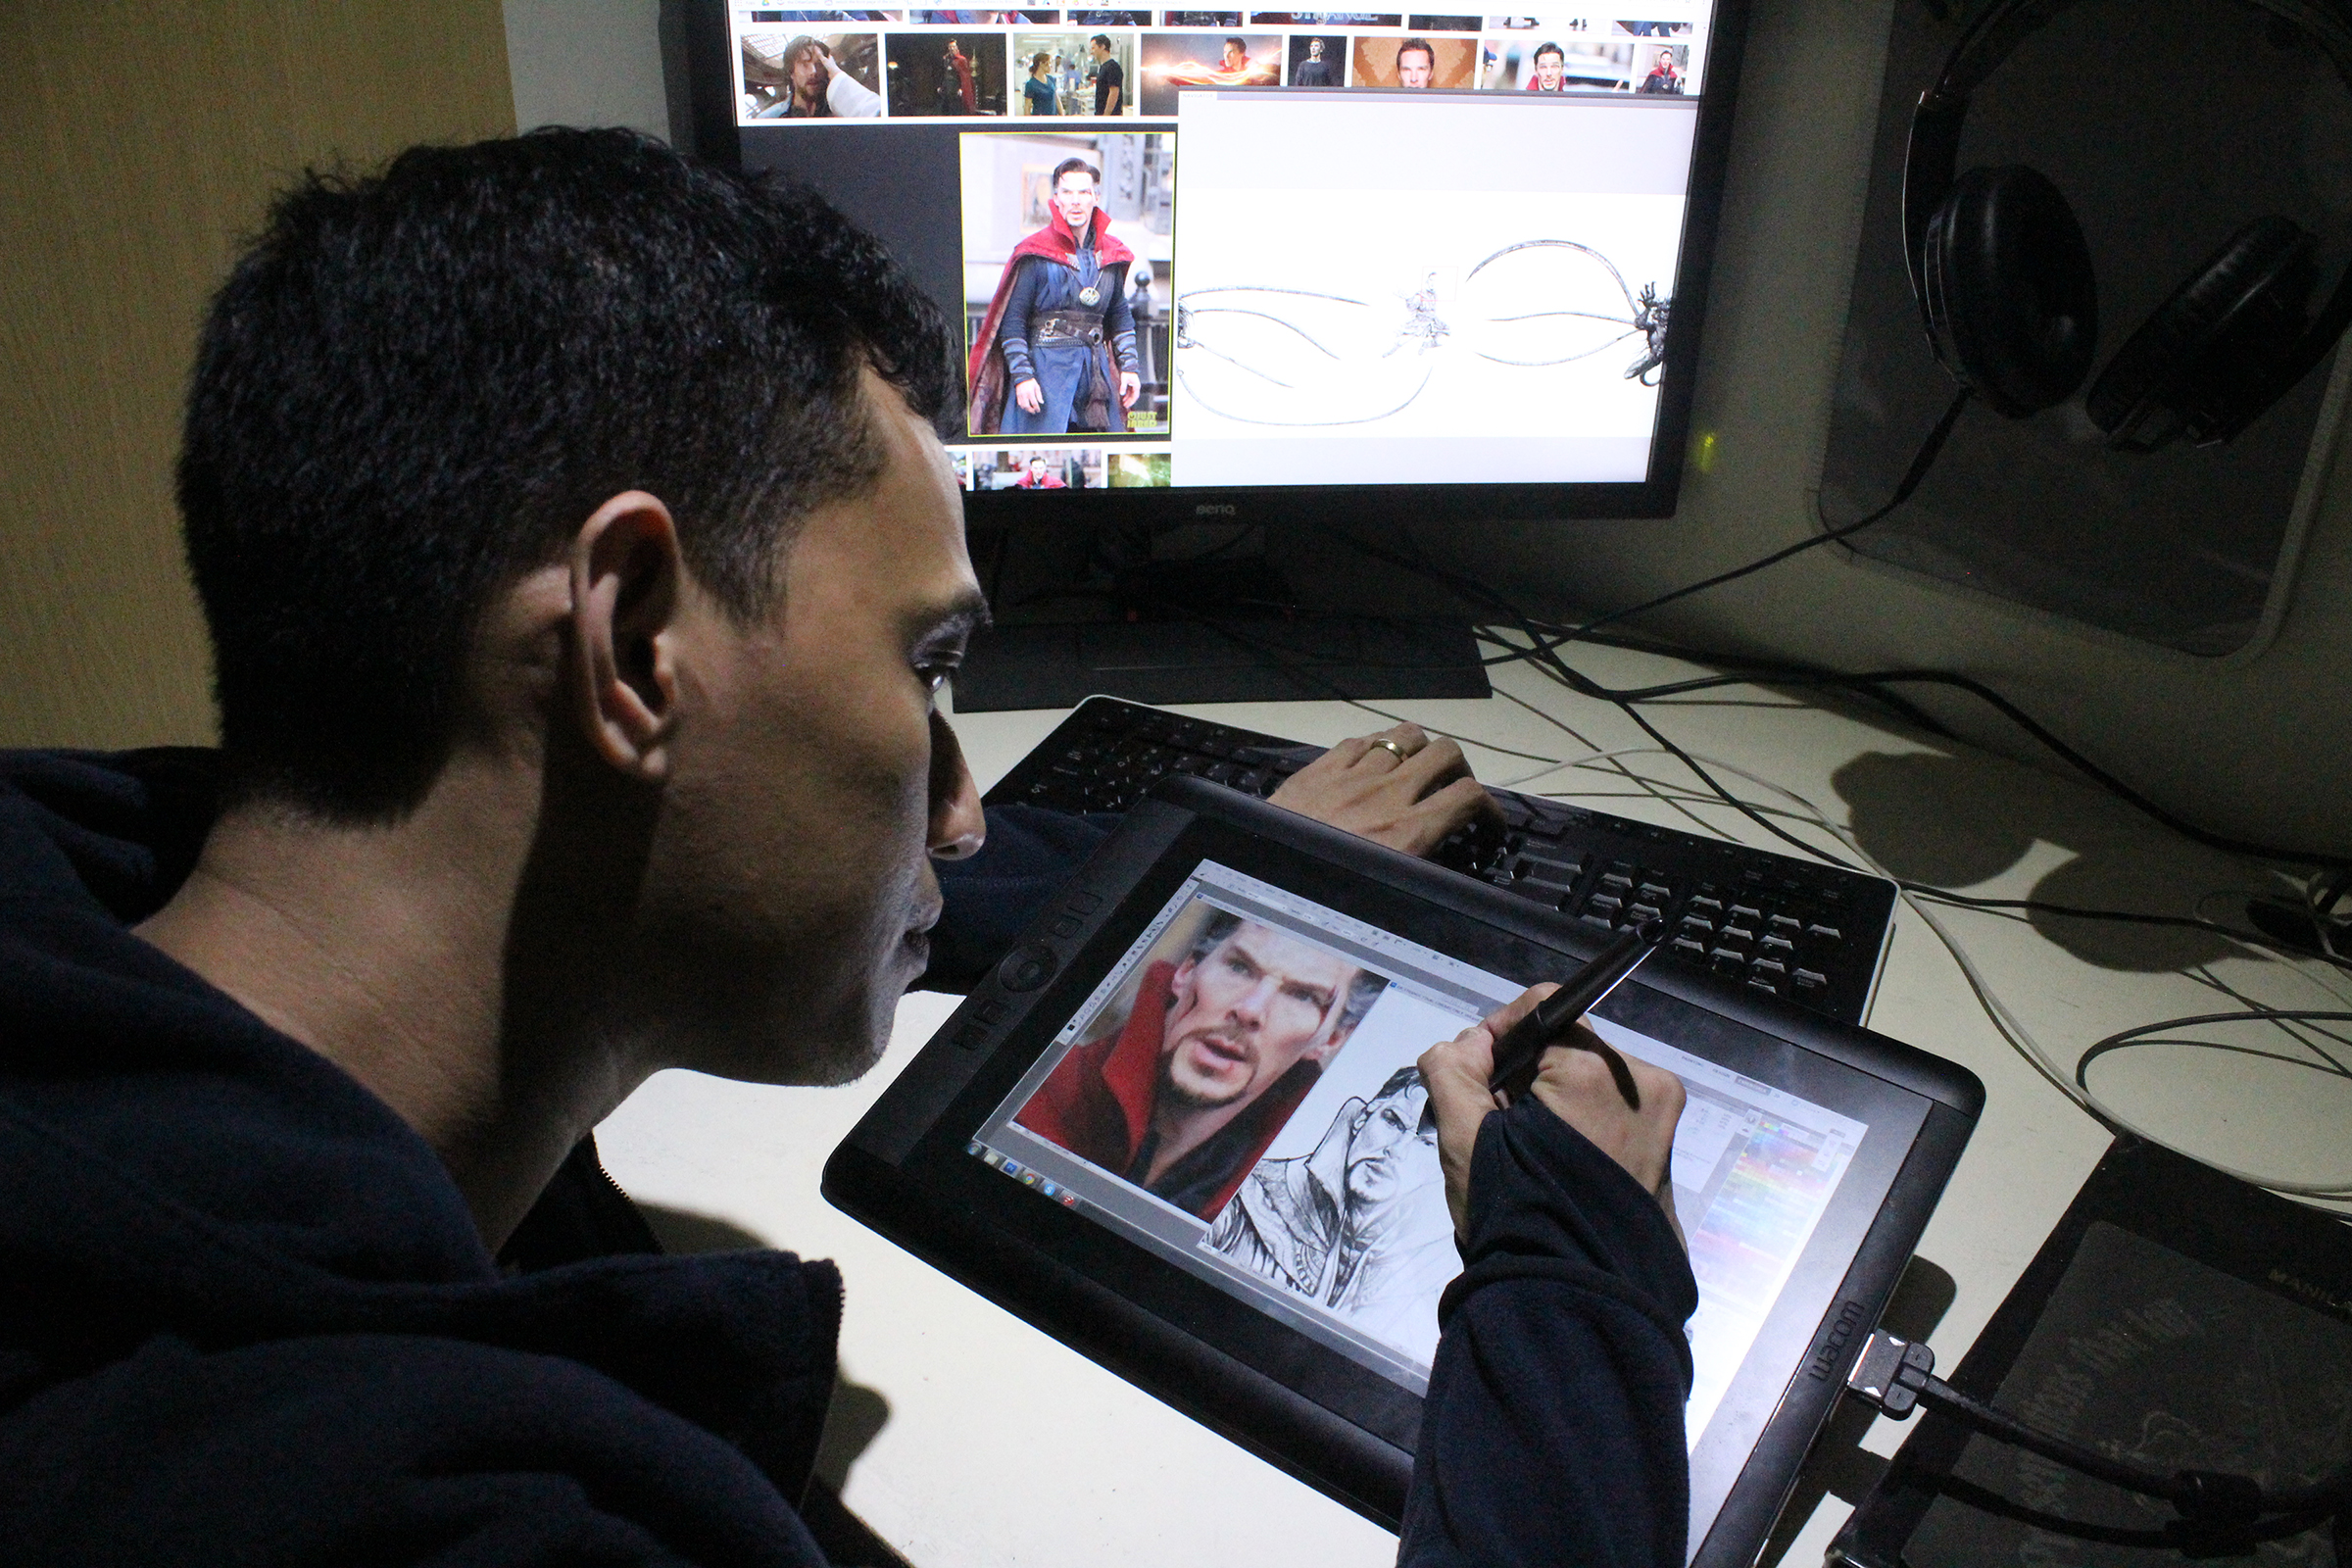 AnimaticmediaVR artist Godfrey E. transforming Benedict Cumberbatch's likeness into a comic book medium.